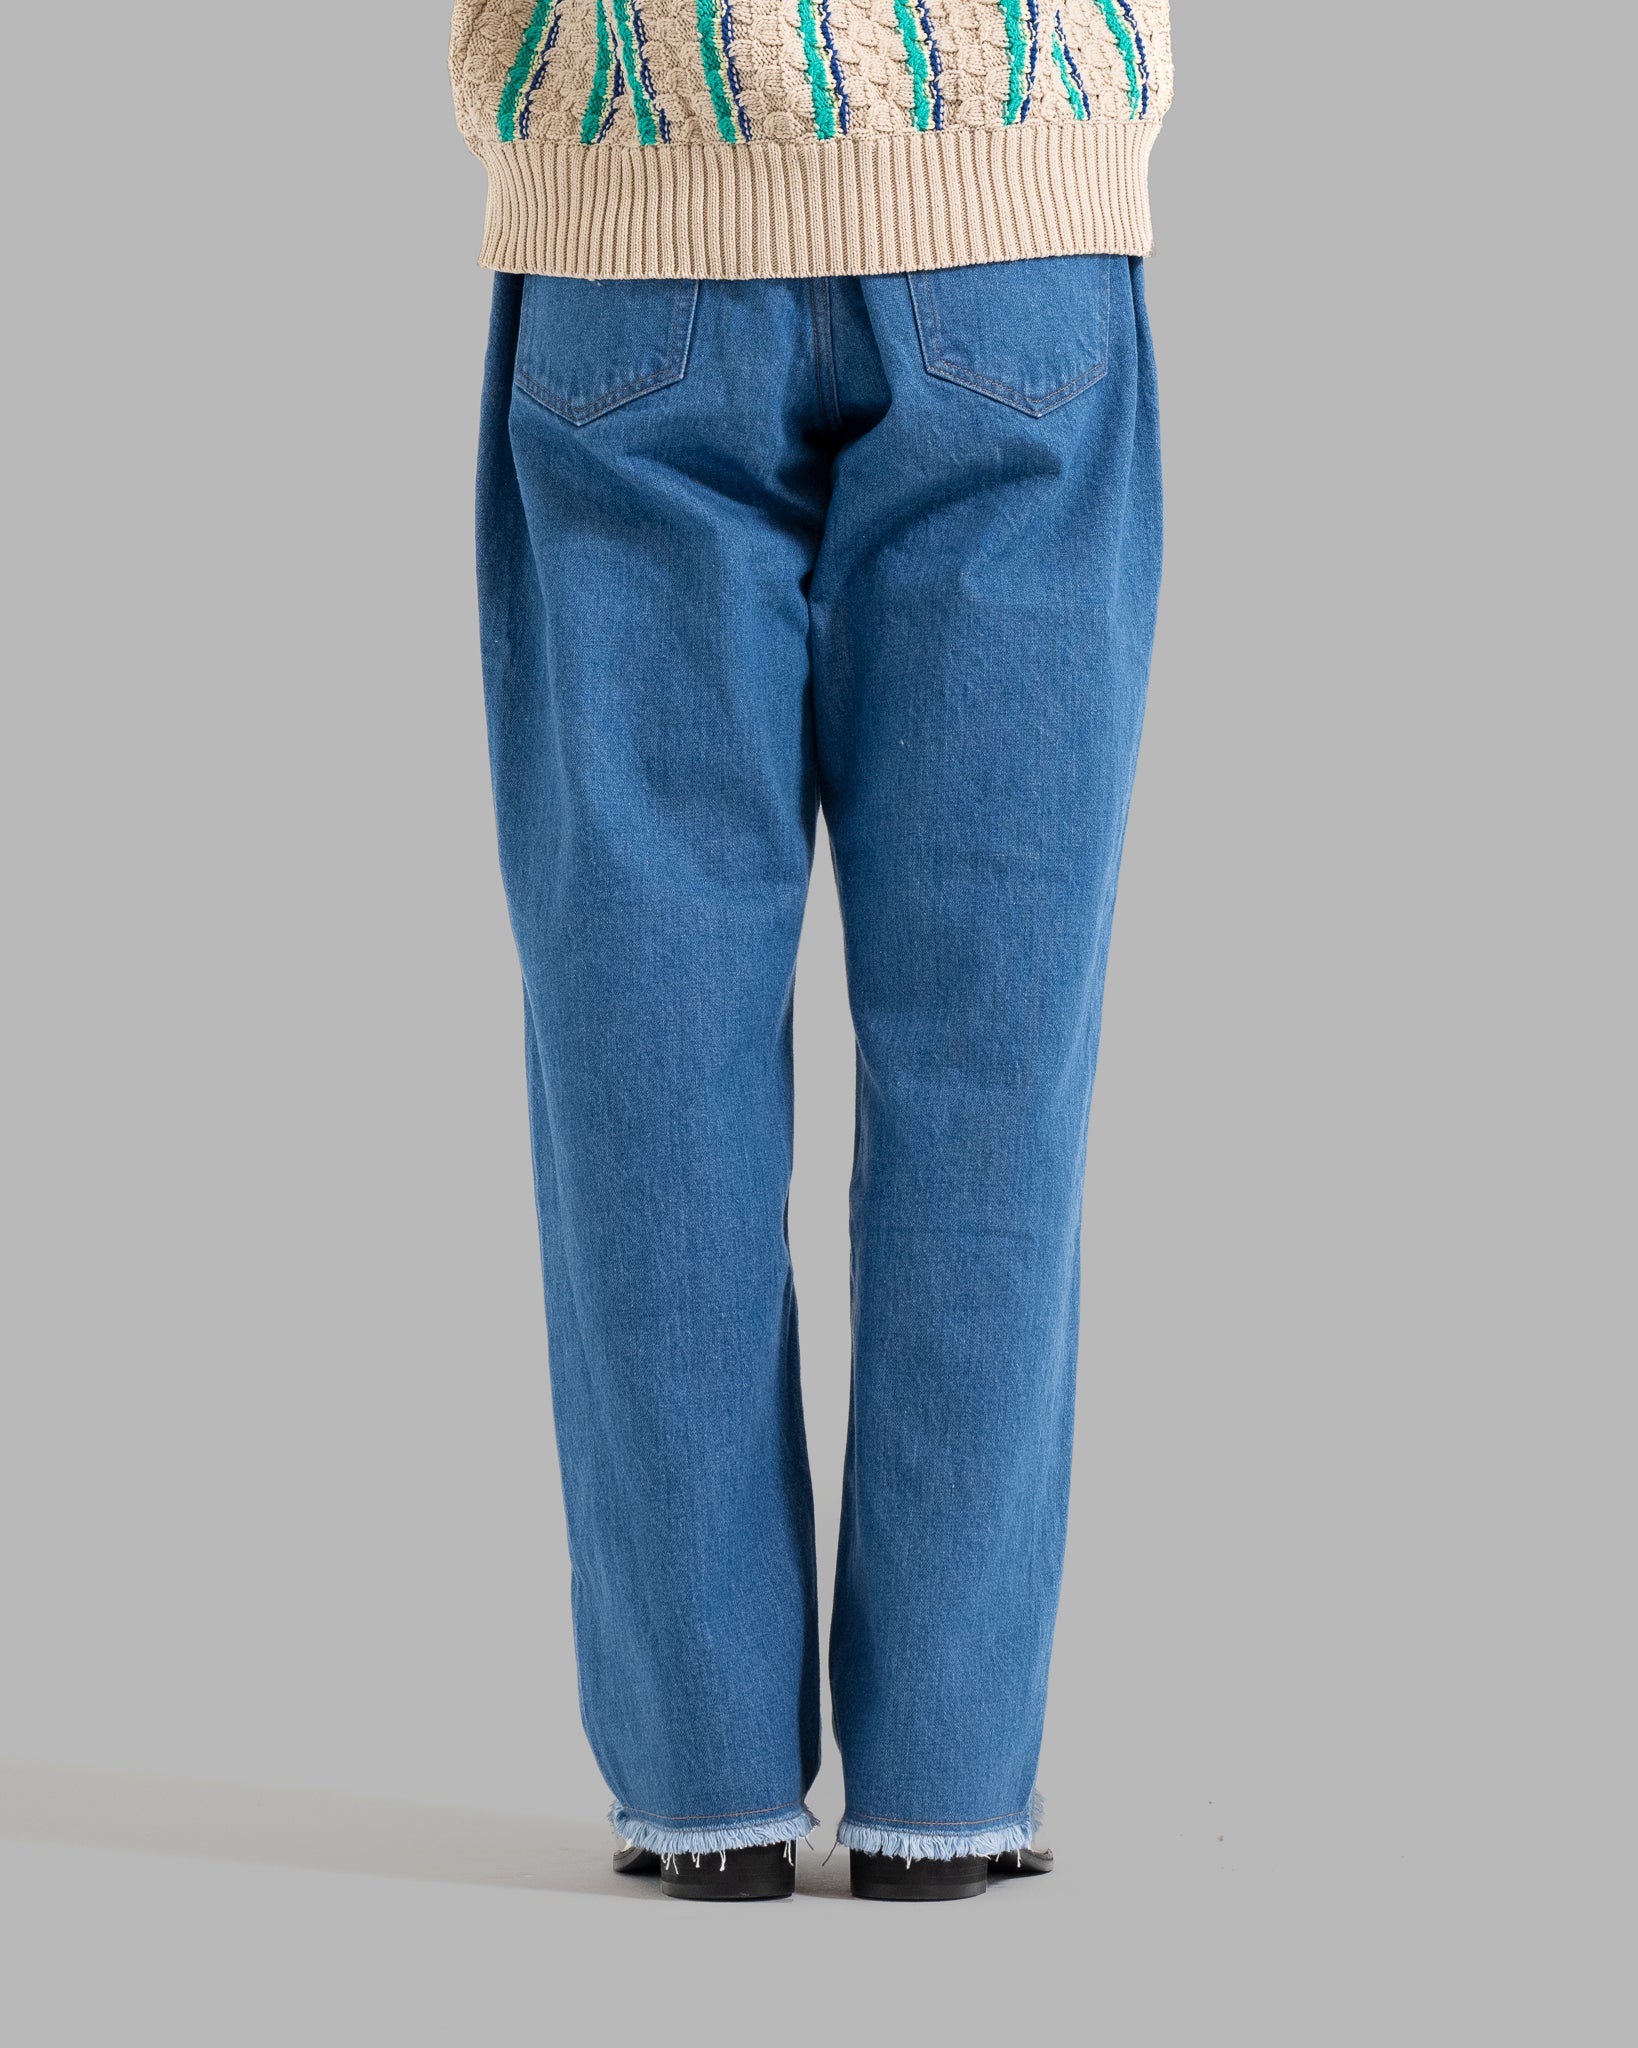 Rodillas Crochet Flower Motif Jeans anchos - Indigo